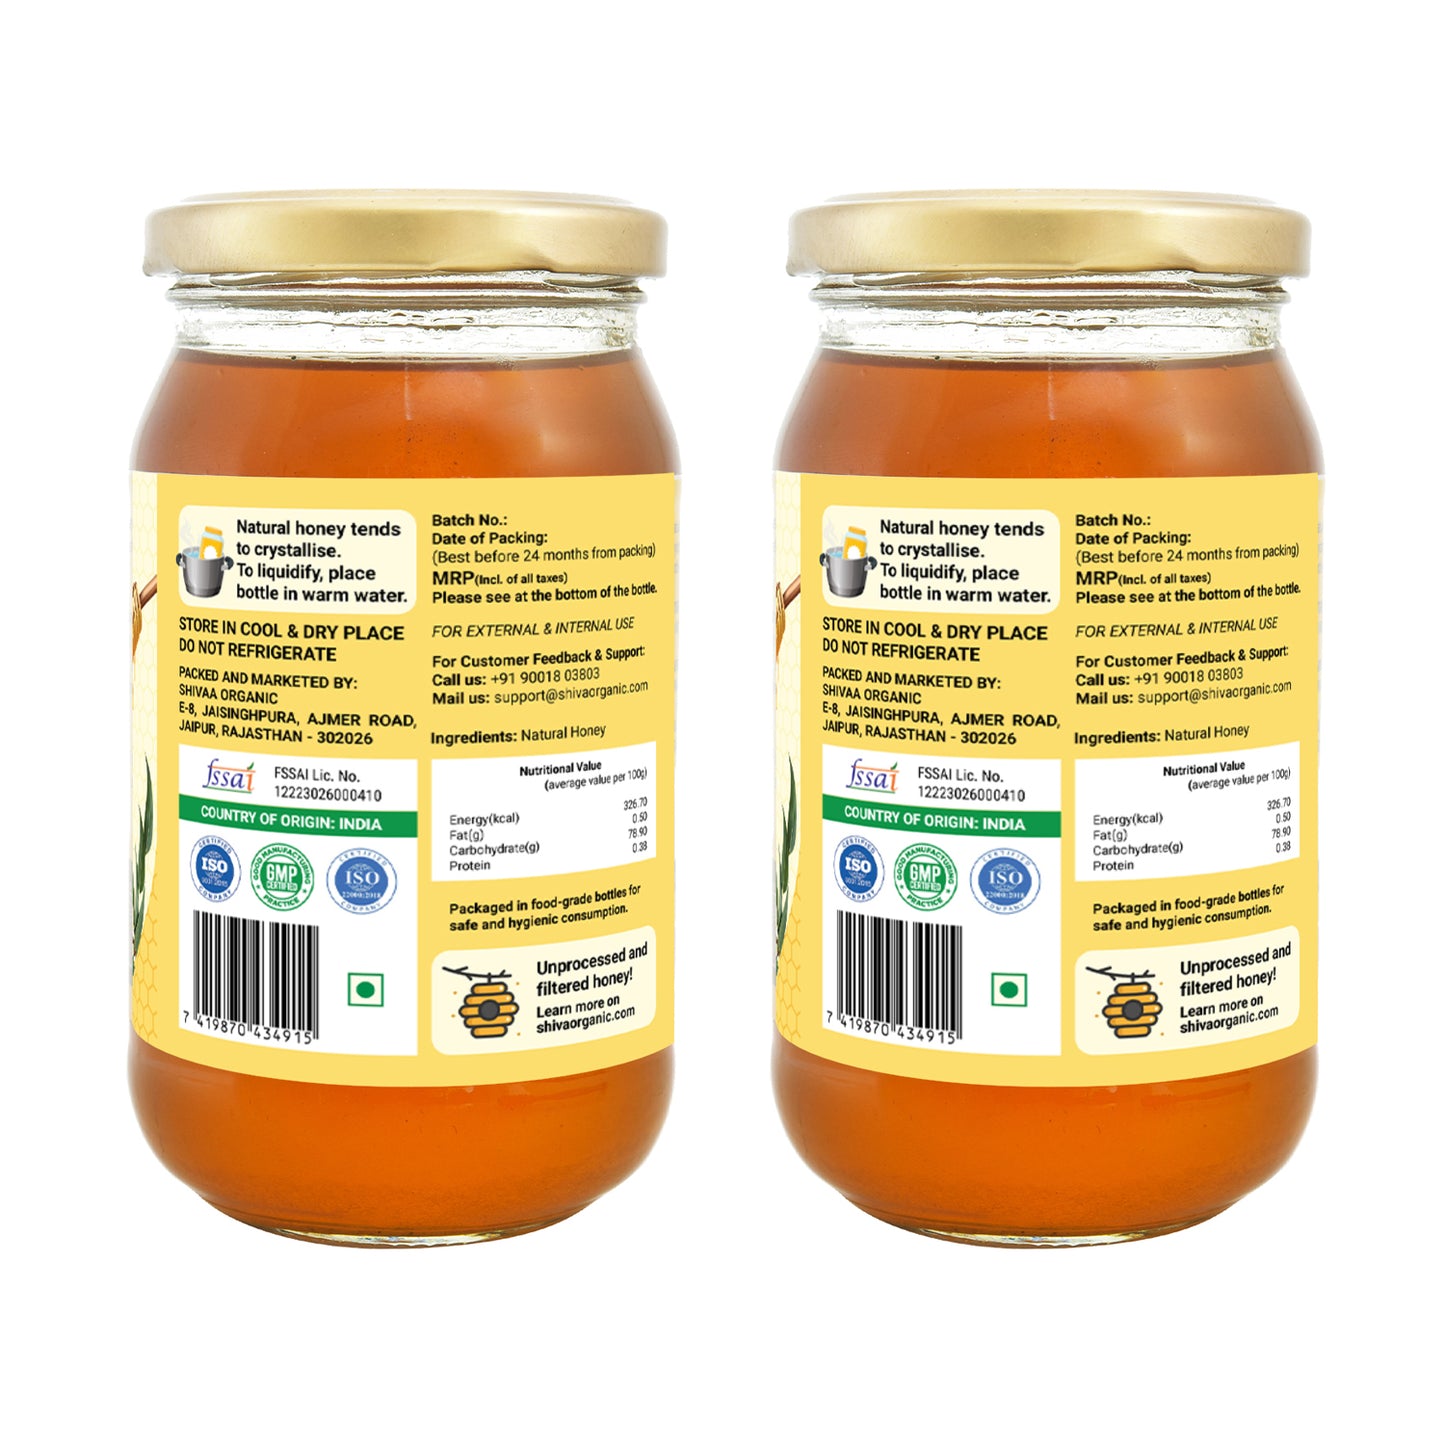 2x500 gm, Eucalyptus Honey